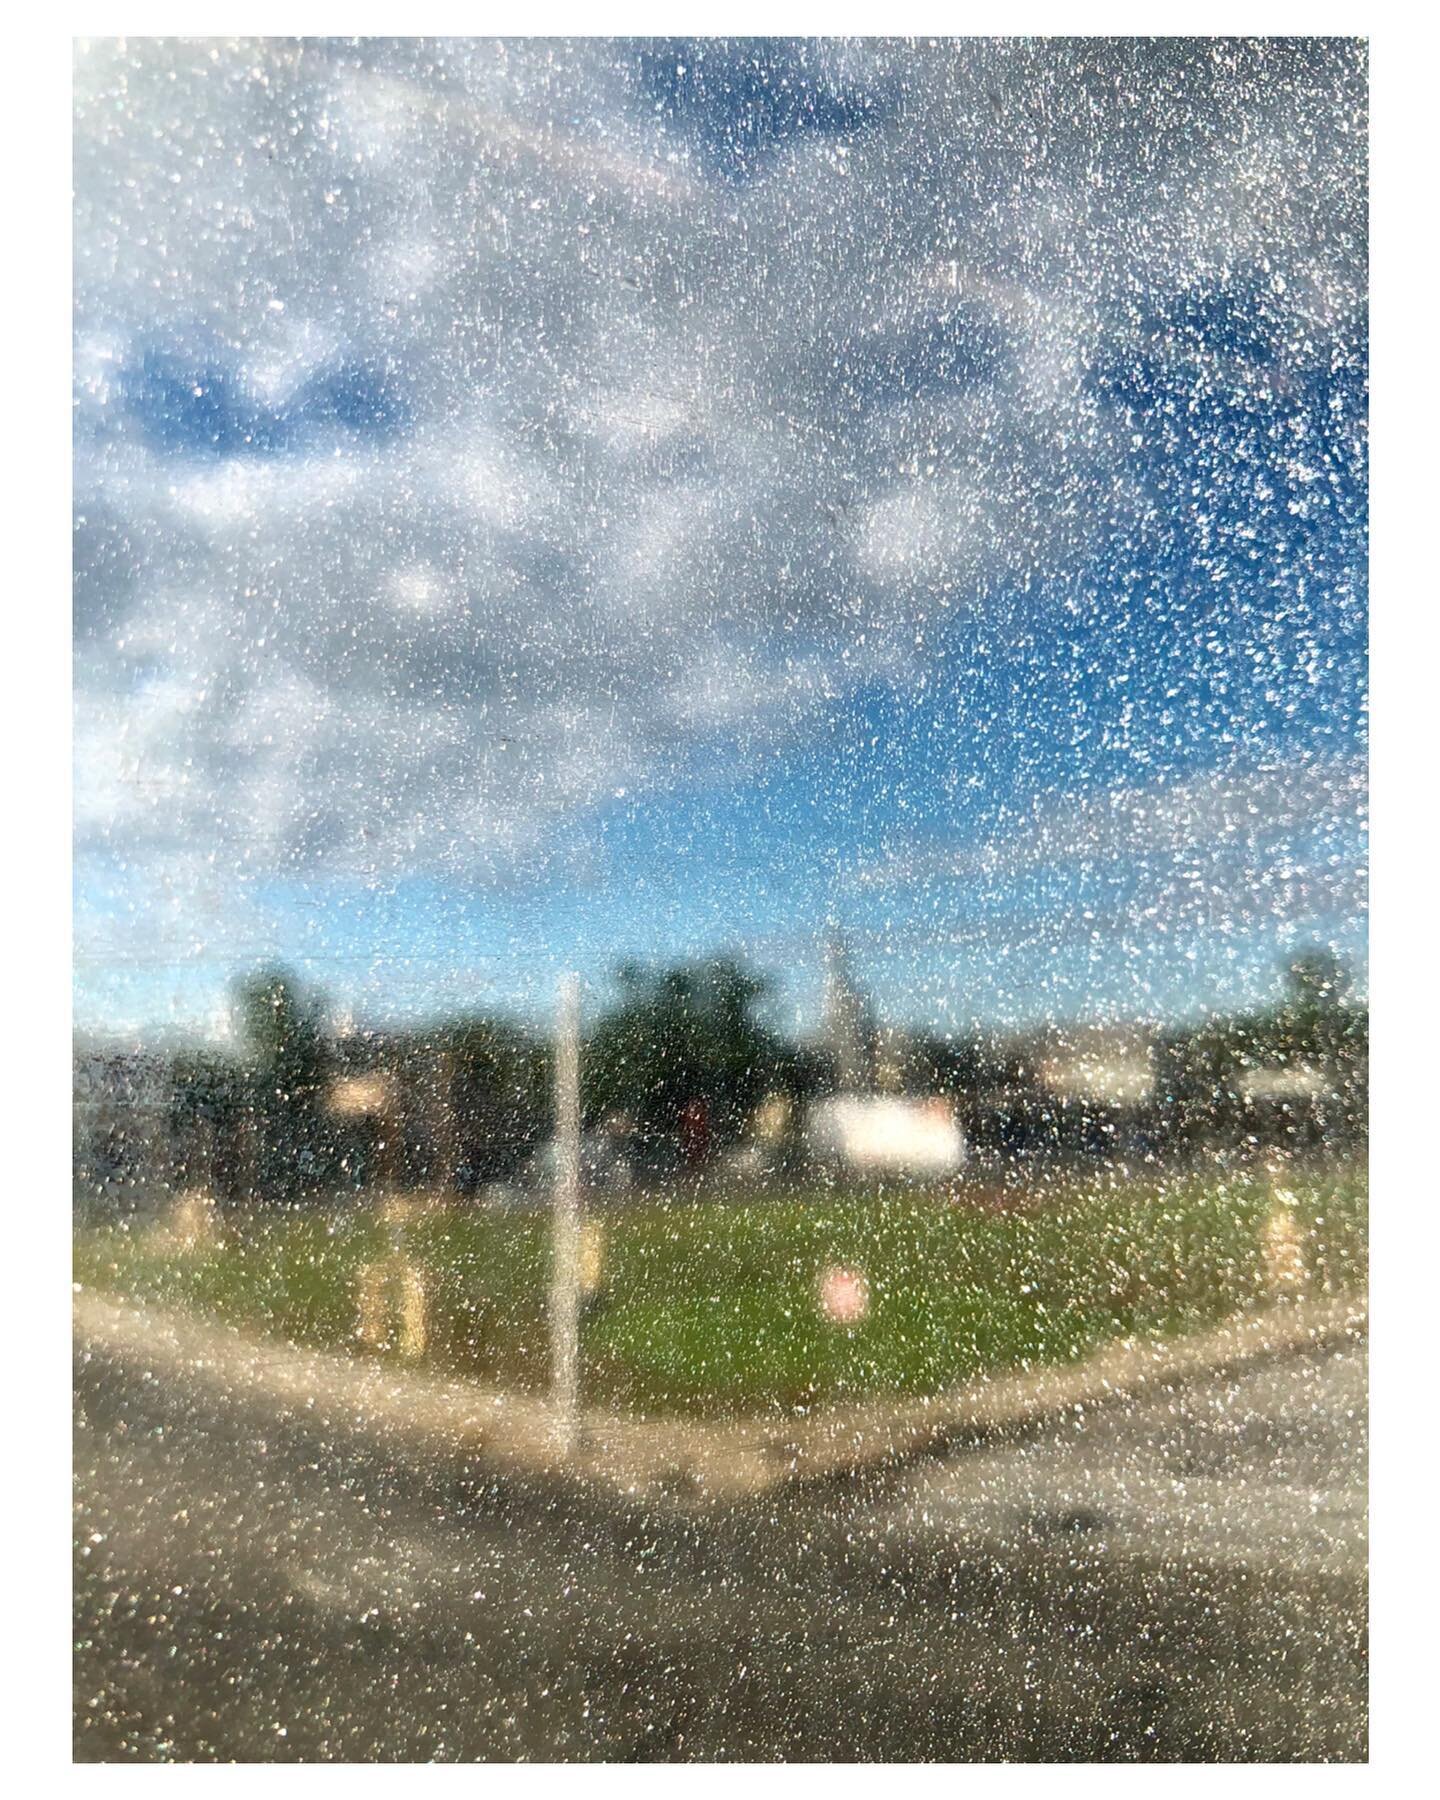 Fleeting Landscapes &amp; Dirty Windows &mdash;&mdash;
#iphone #longisland #lirr